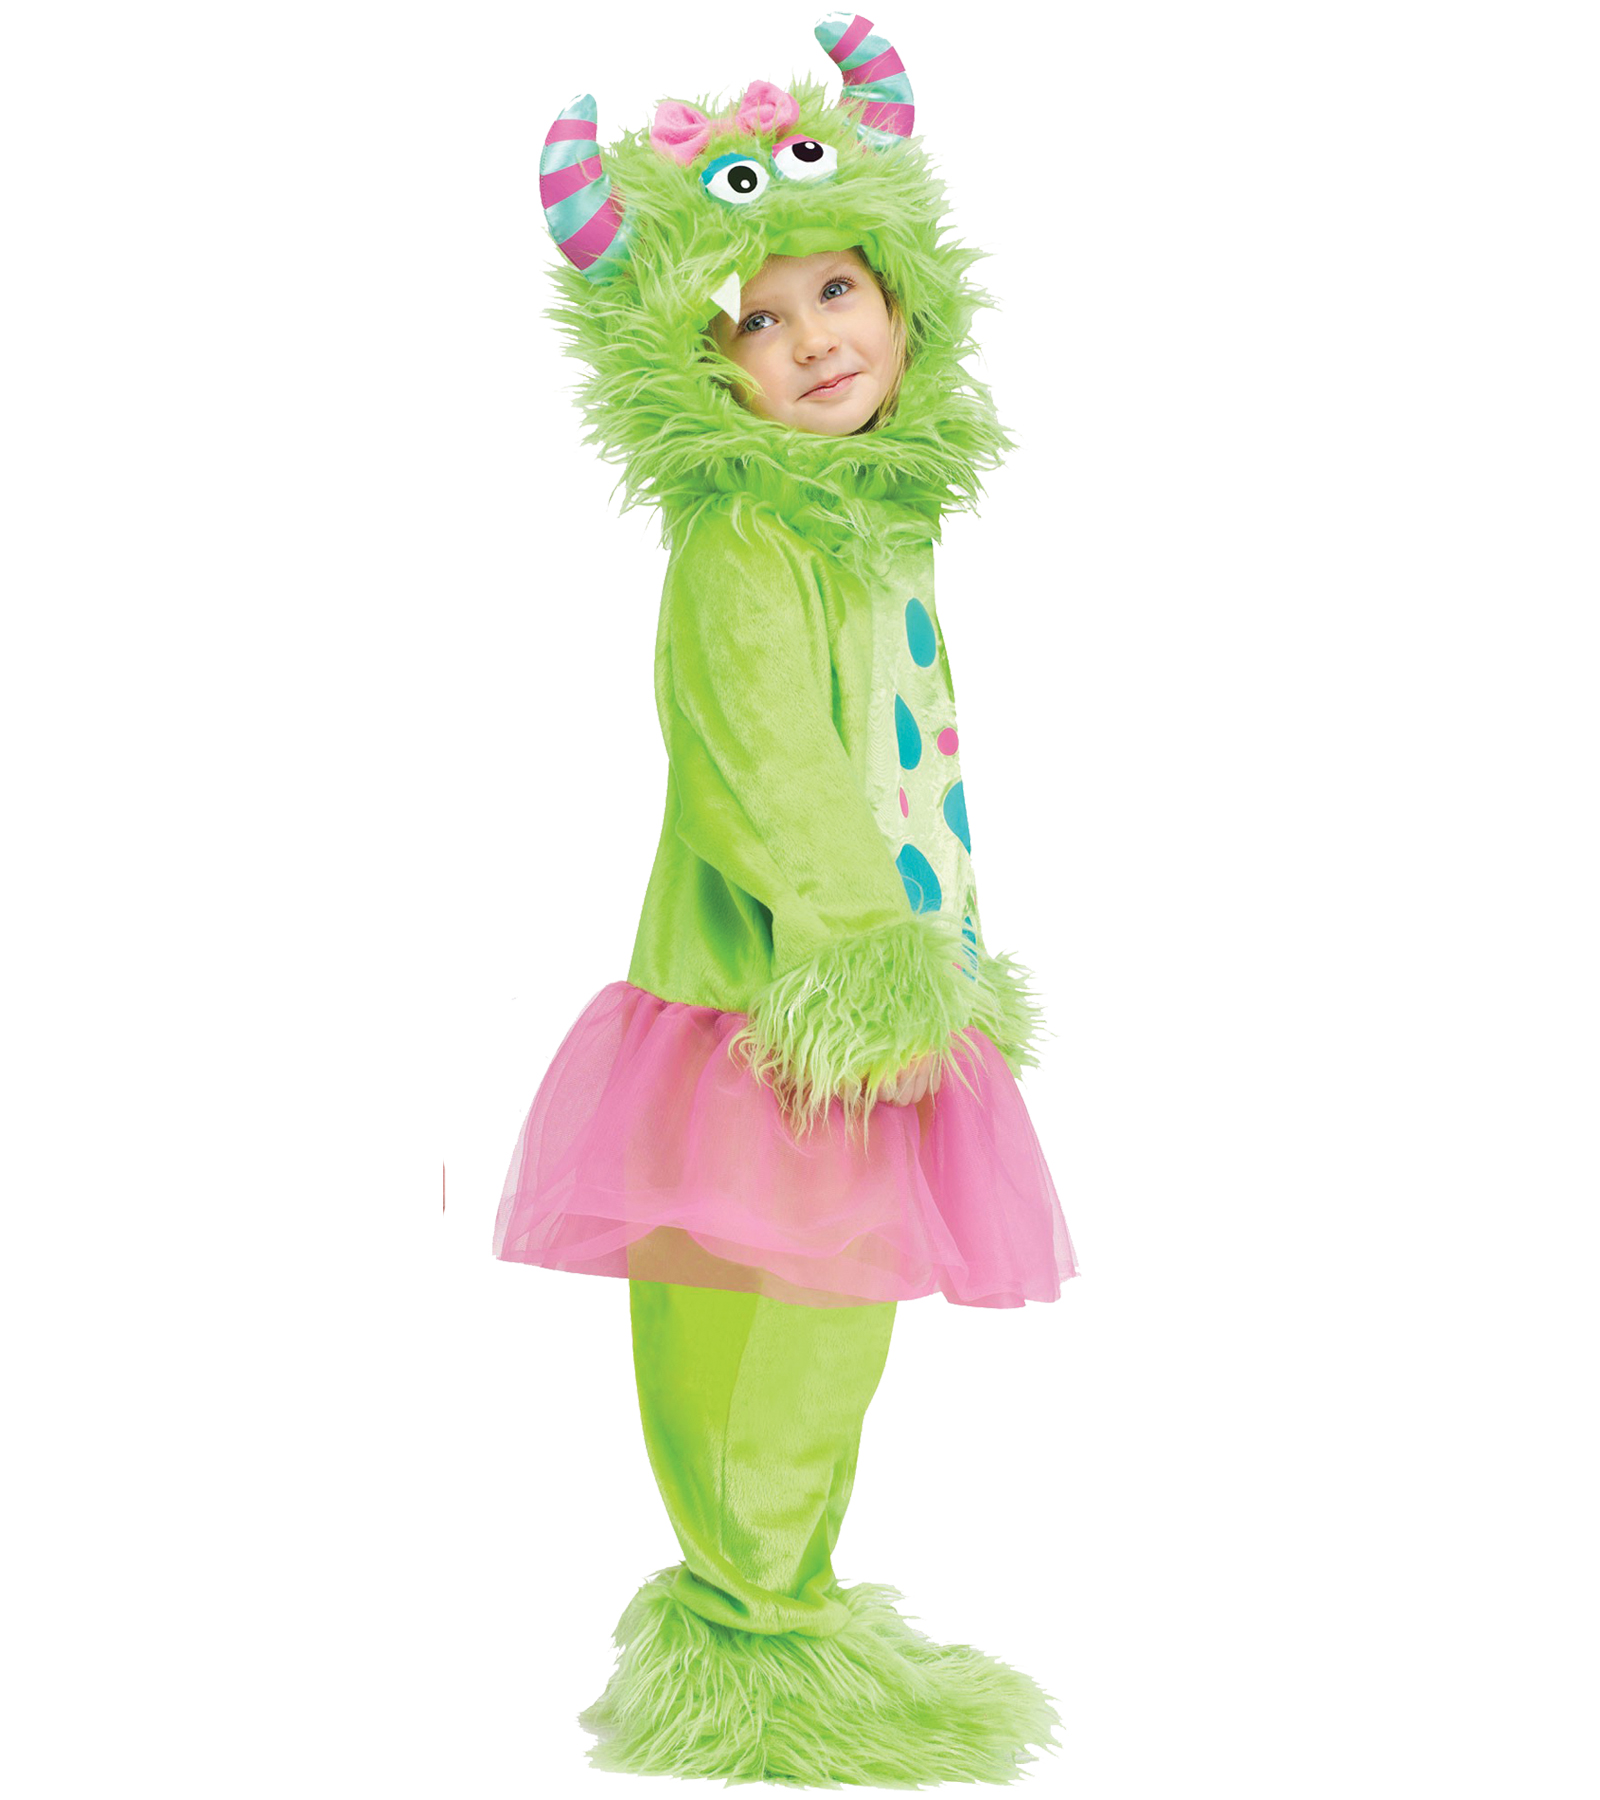 Toddler Terror In A Tutu Halloween Costume